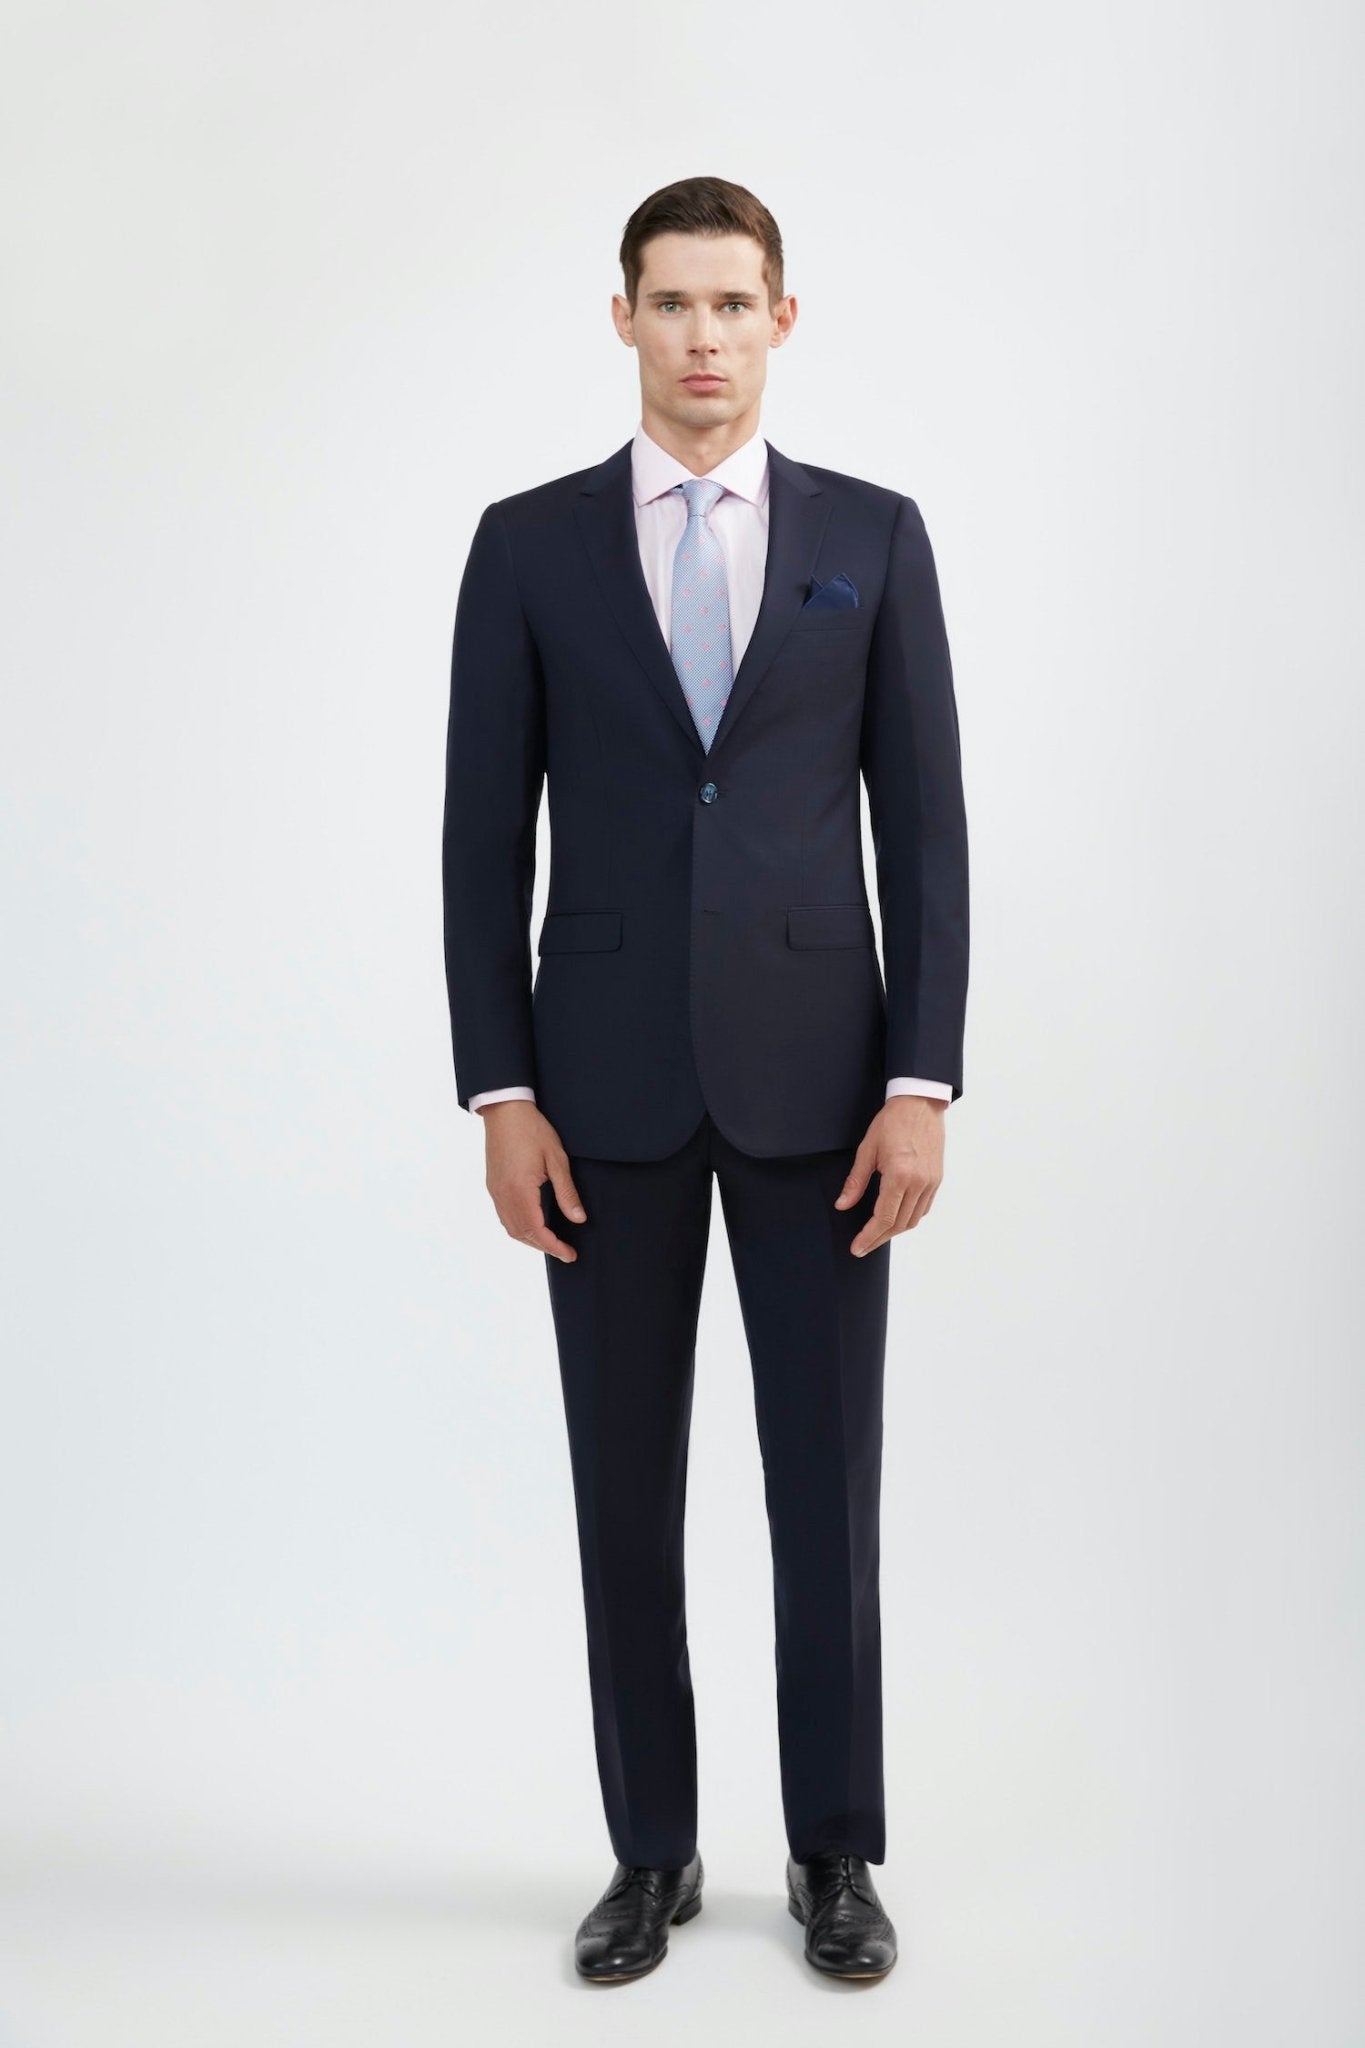 Royal Blue Suit  Buy A Royal Blue Suit For Men at Tomasso Black – Tomasso  Black